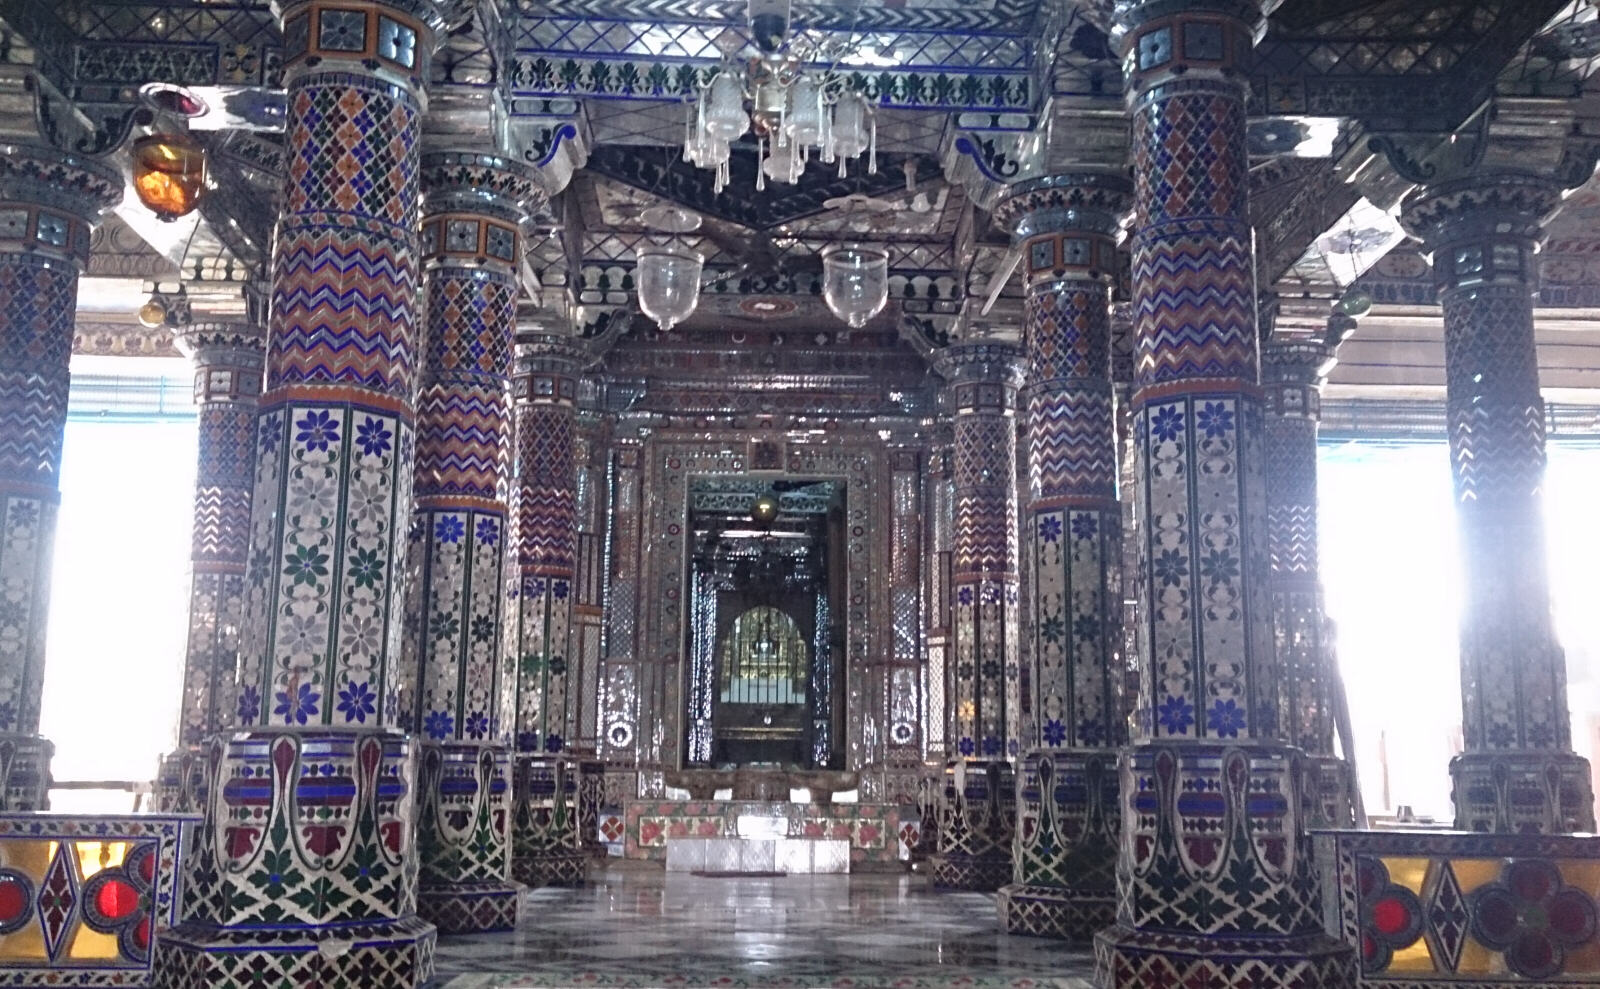 Shree Sheetal Nath Jain temple in Udaipur, Rajasthan